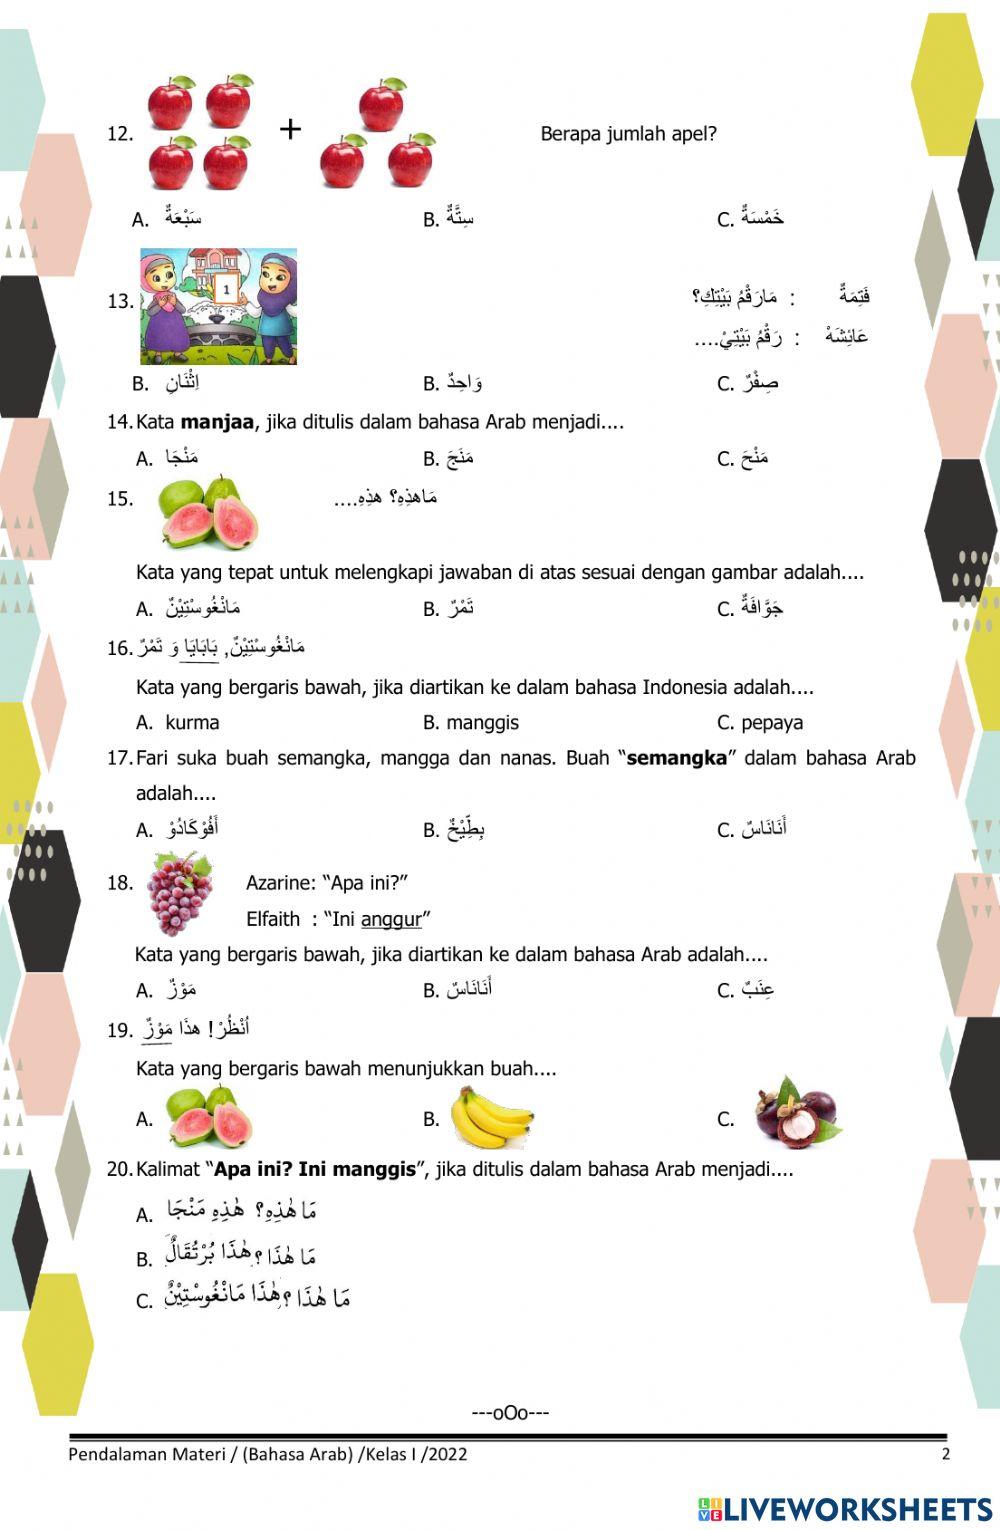 Pendalaman Materi PTS (Bahasa Arab) kelas 1